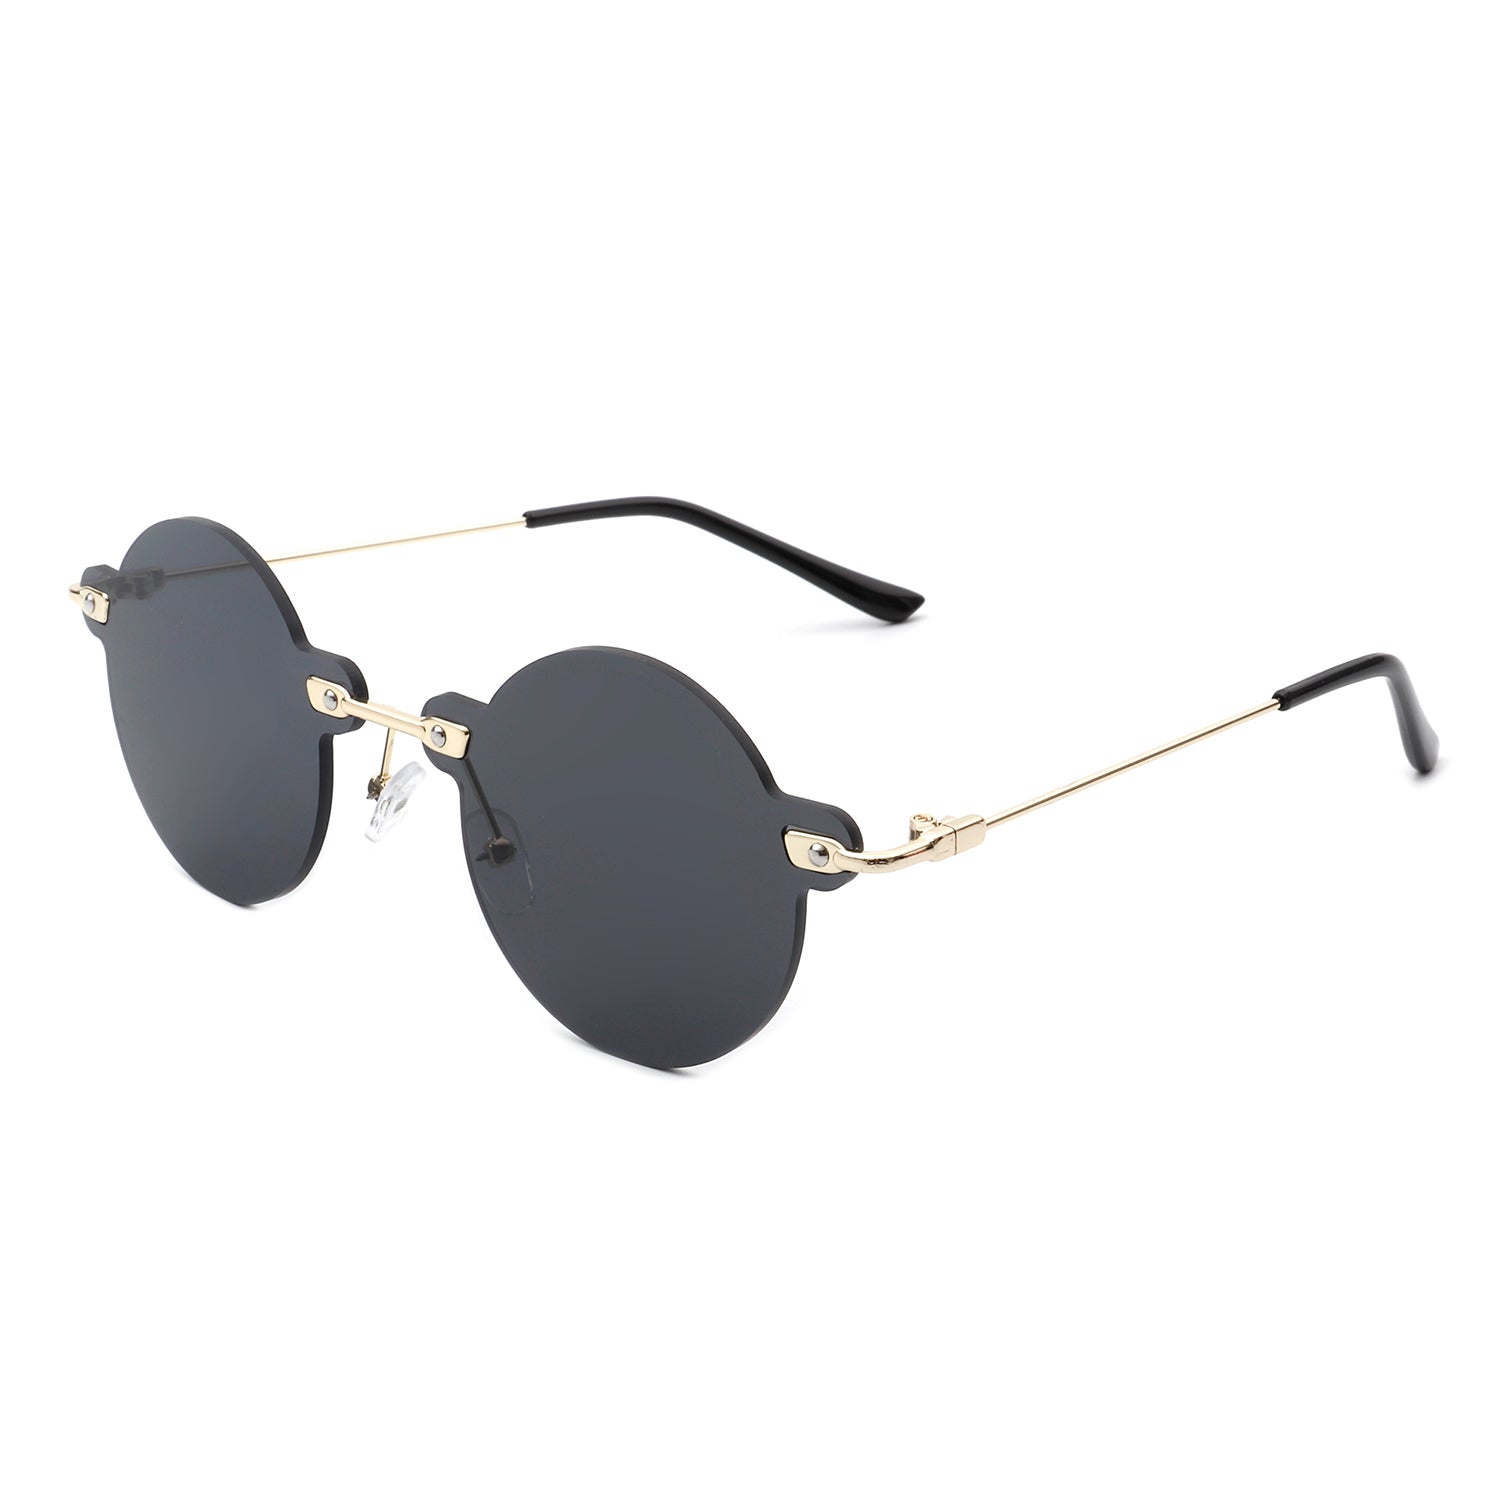 Circle Retro Round Rimless Fashion Tinted Vintage Sunglasses by IRIS FASHION SUNGLASSES